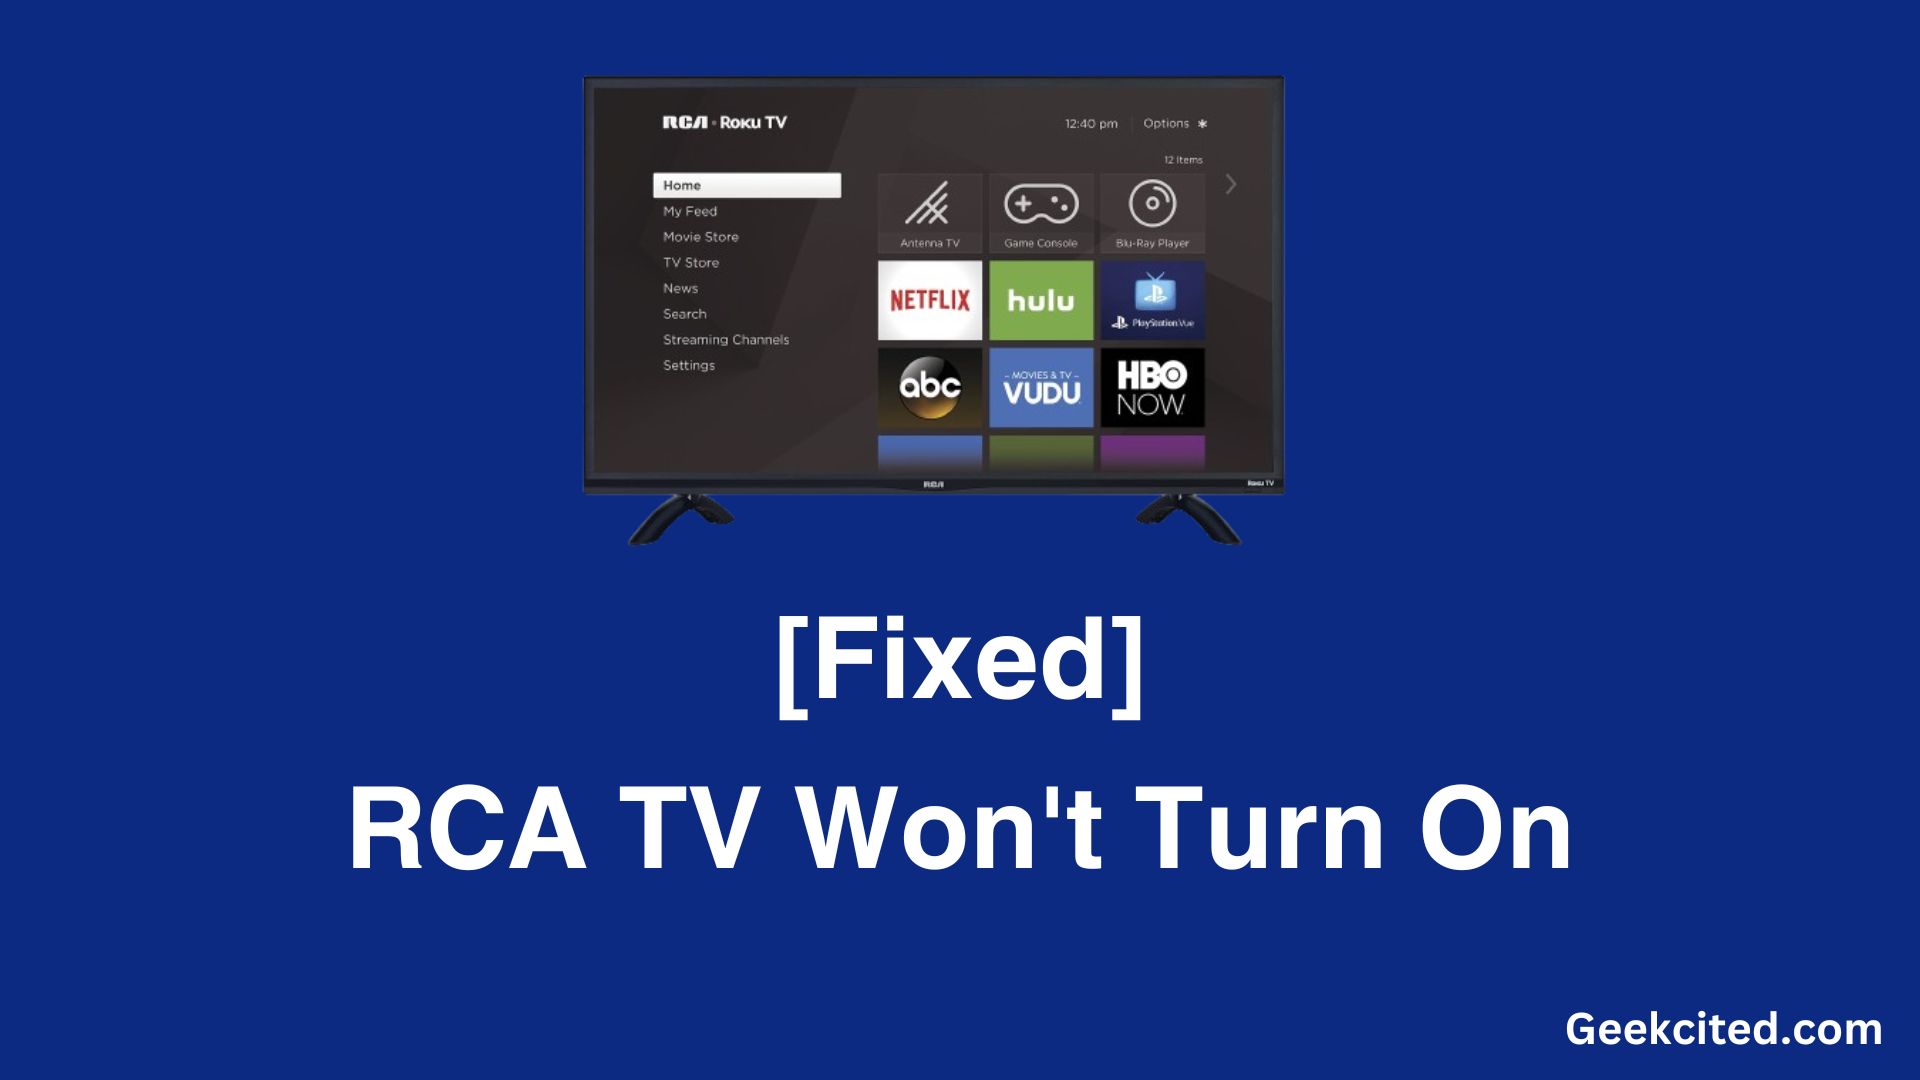 rca tv won't turn on